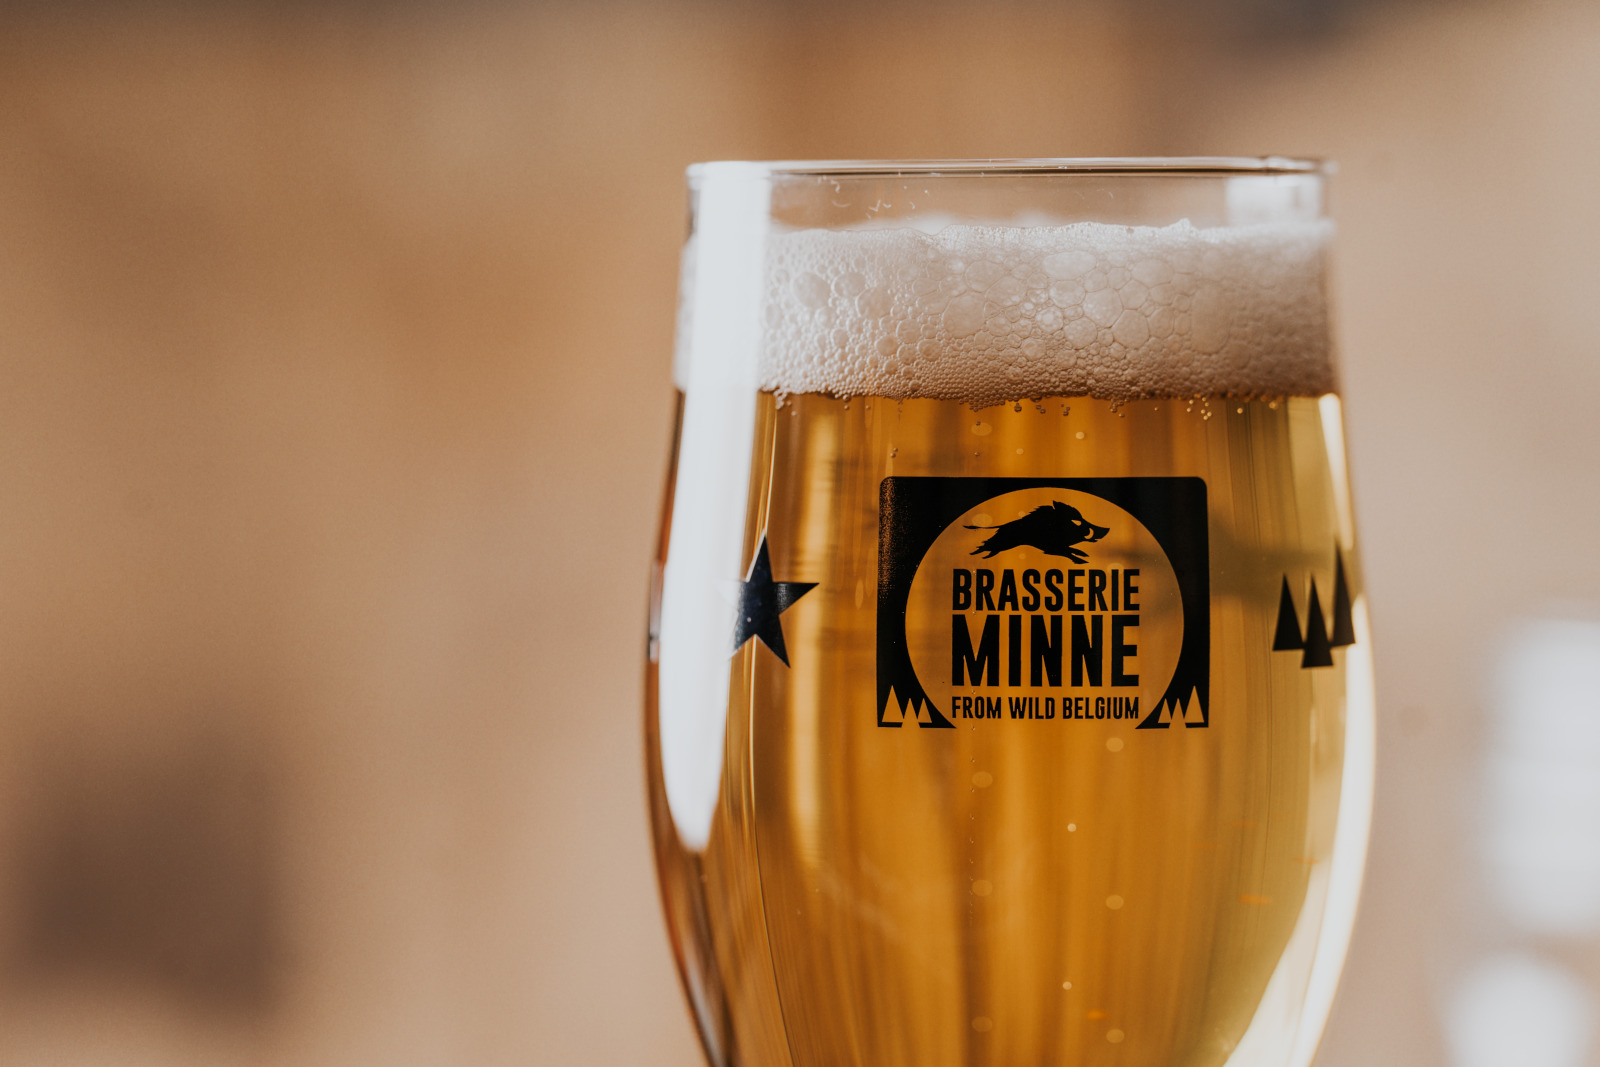 Verre au logo de la Brasserie Minne rempli de bière